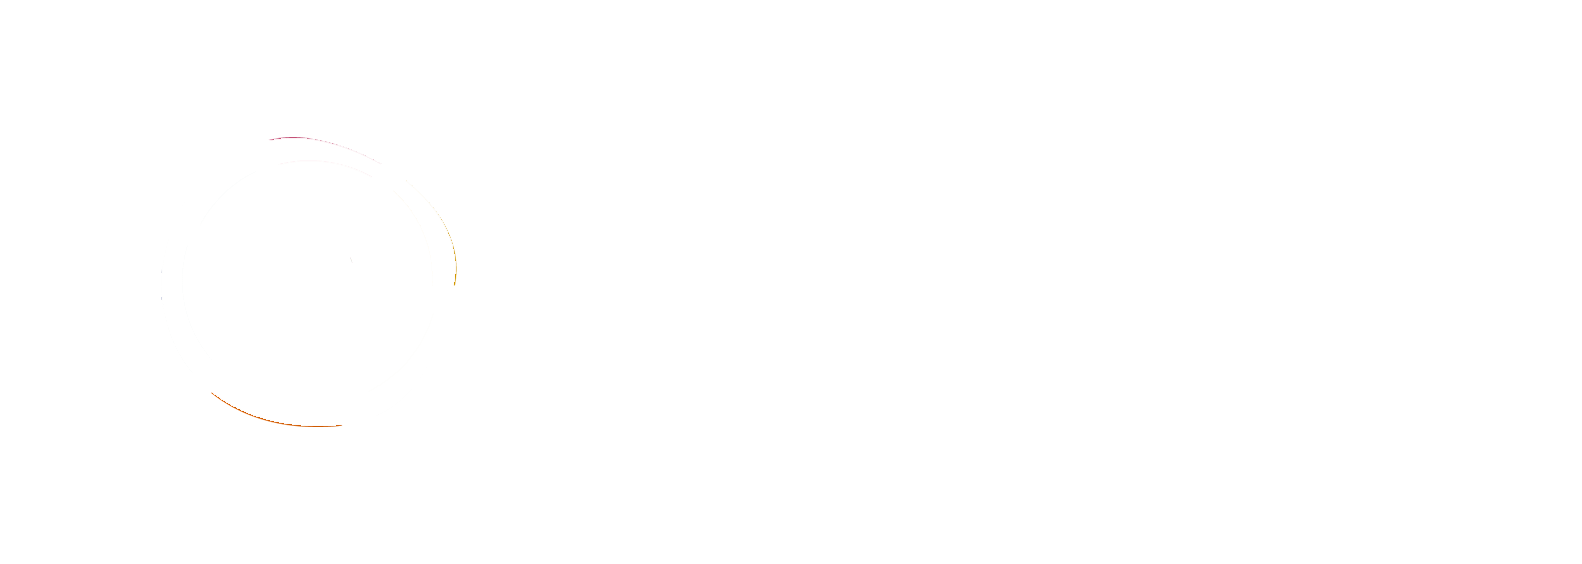 Filmproduktion Bern - BOFF. - Logo CELLnTEC Advanced Cell Systems